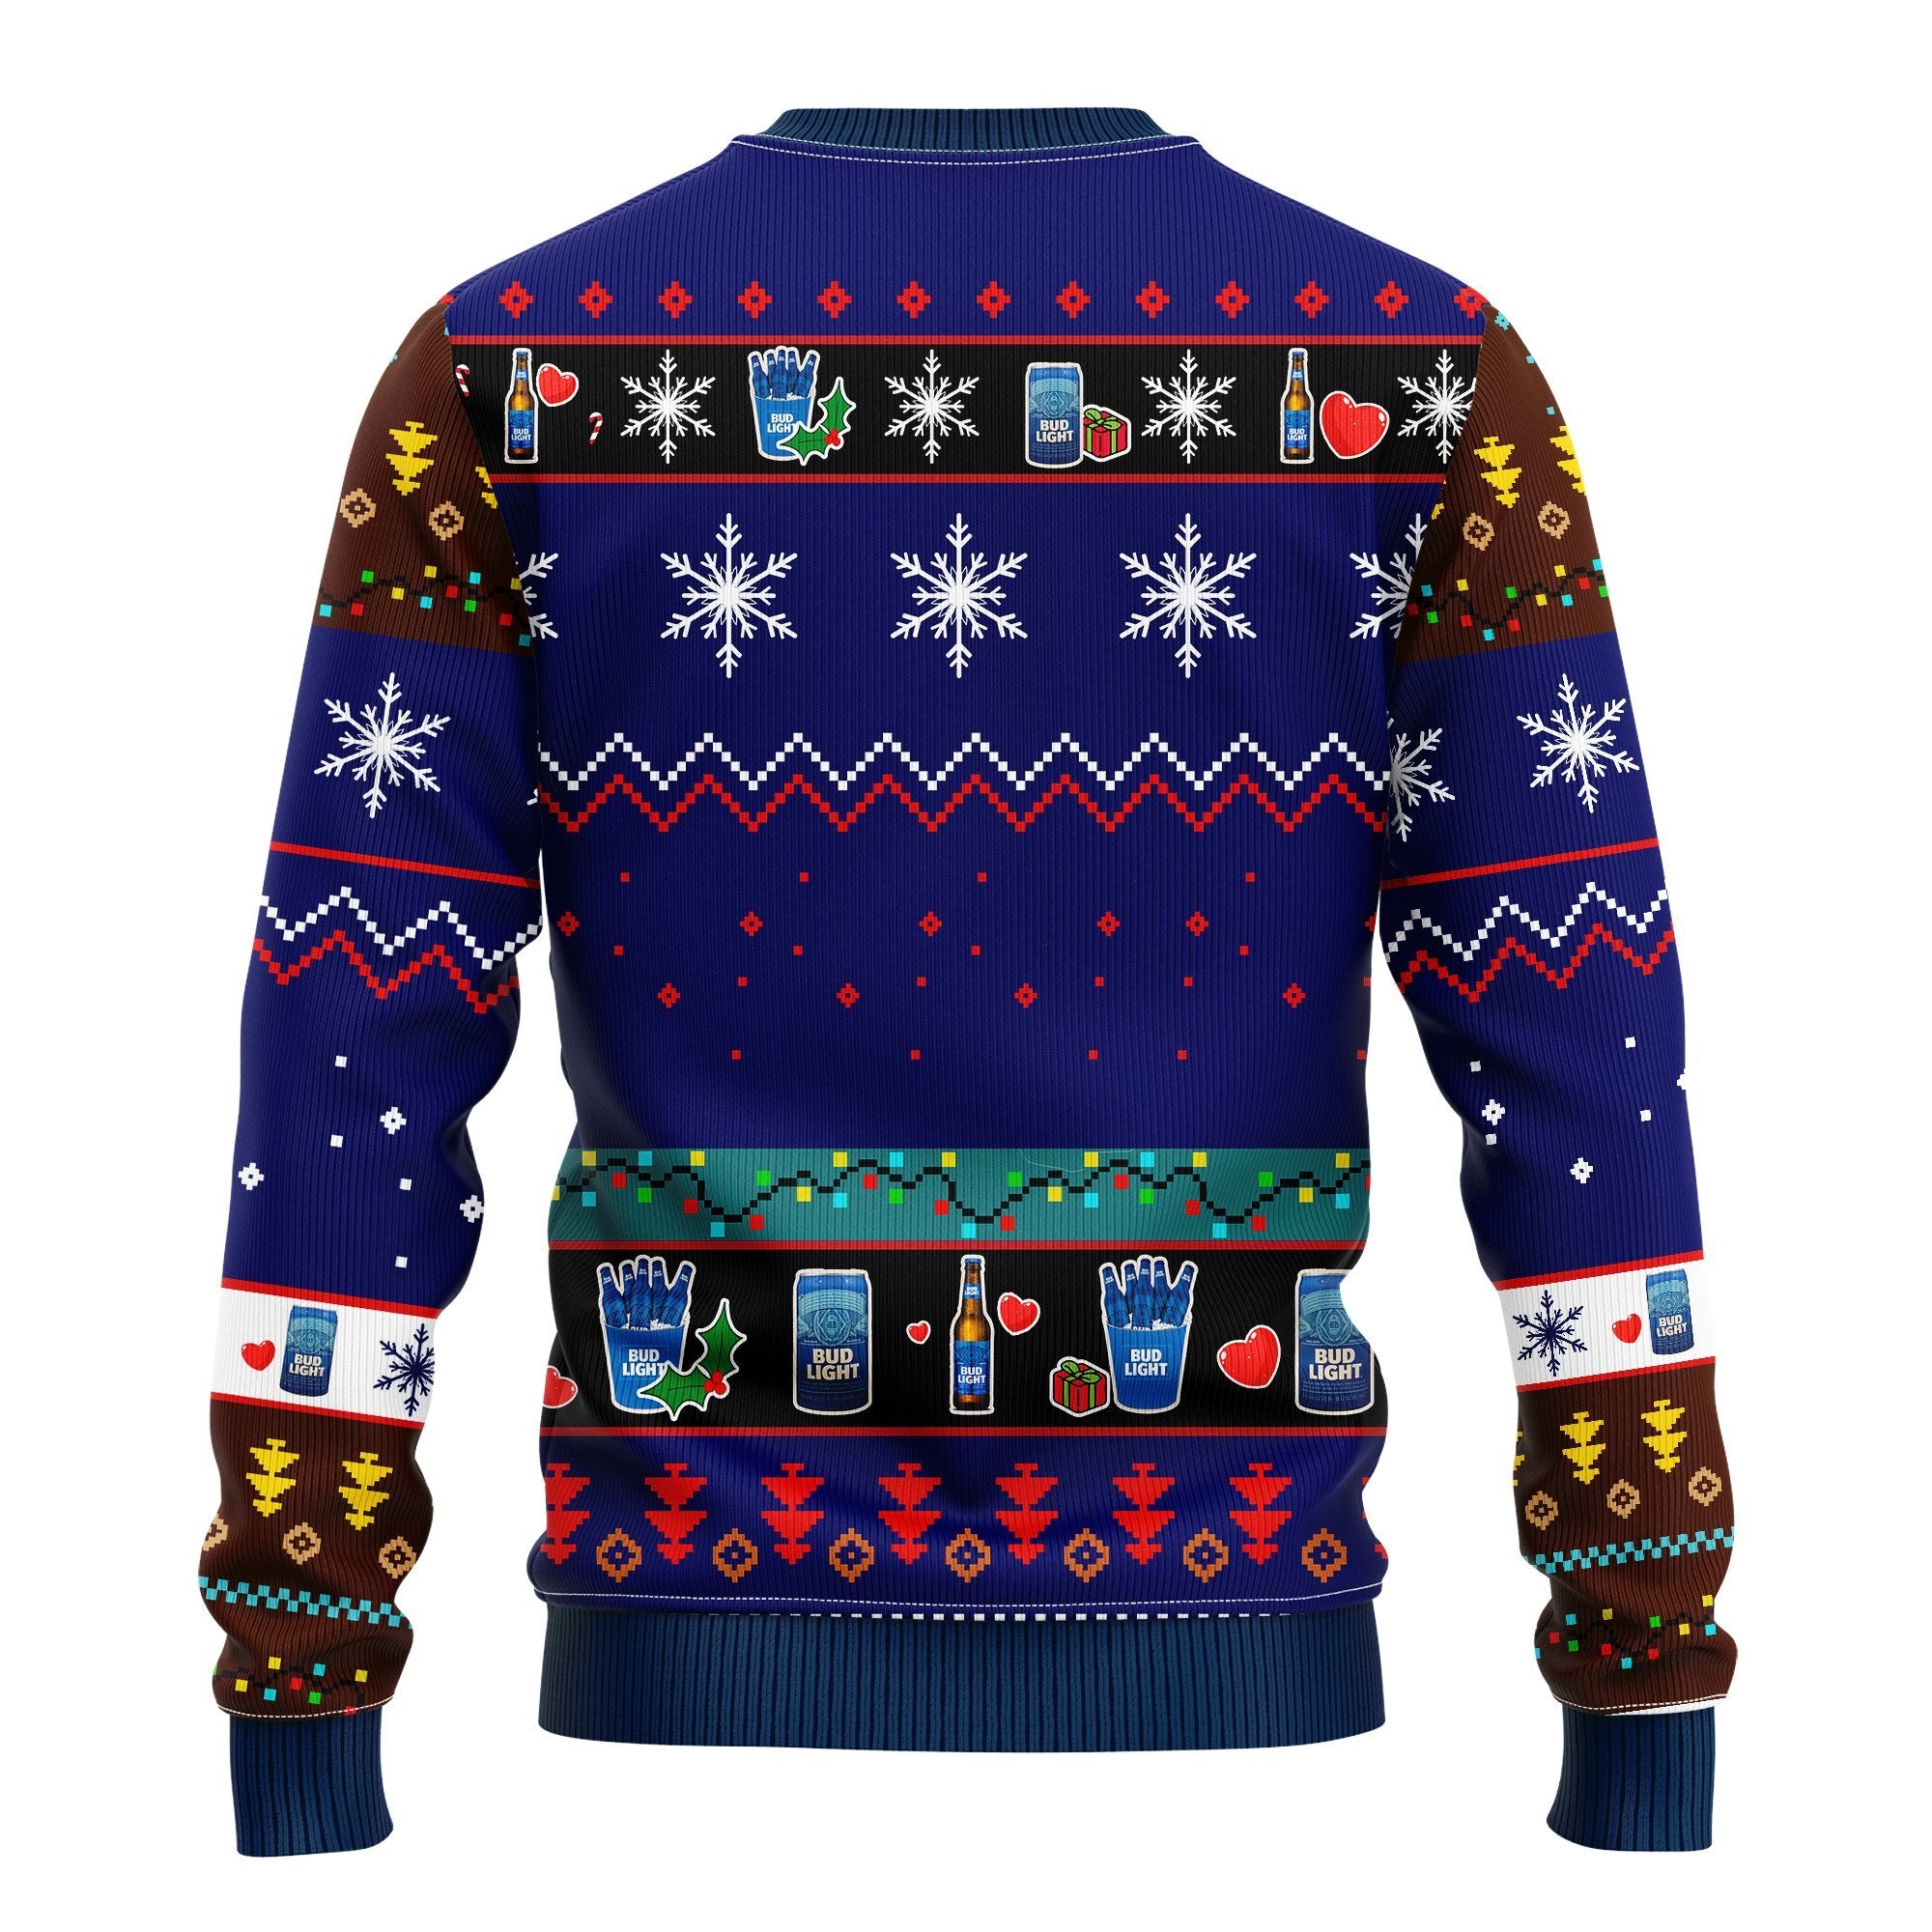 Bud Light Ugly Christmas Sweater Blue 1 Amazing Gift Idea Thanksgiving Gift